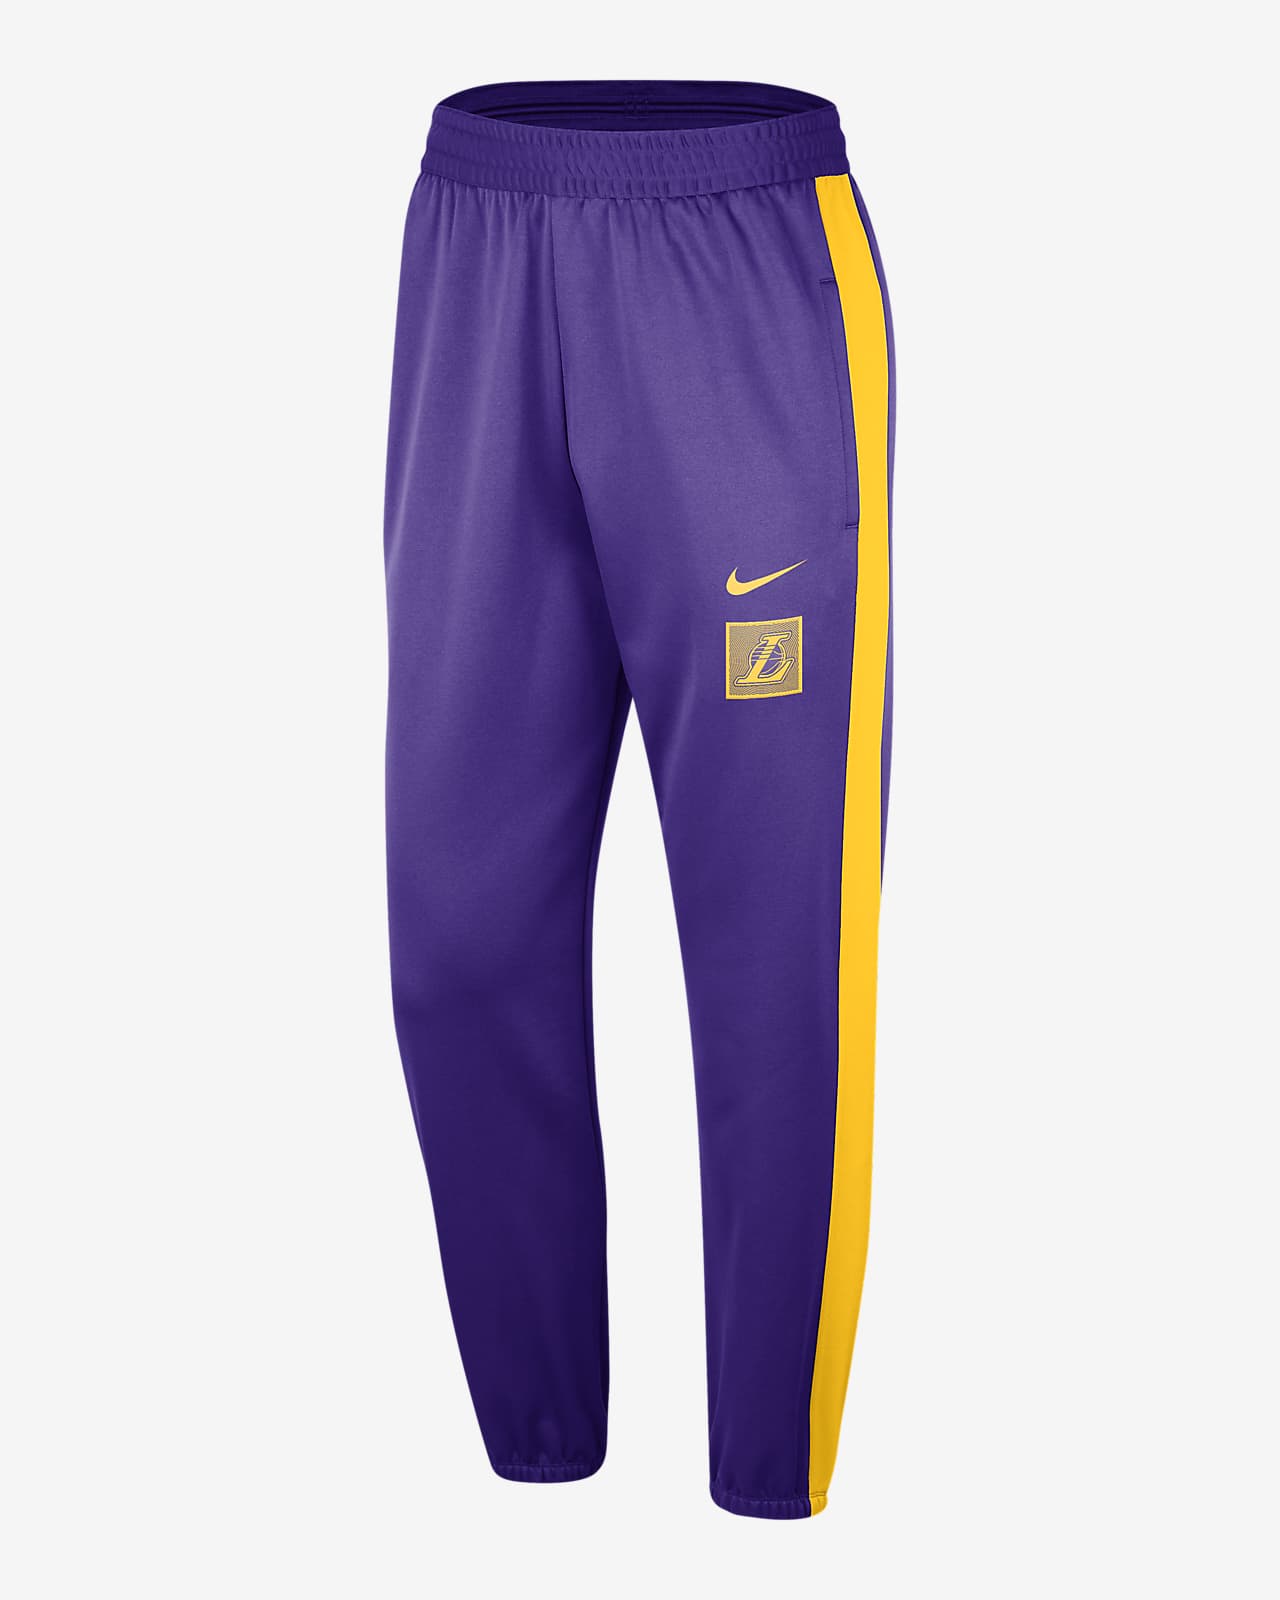 Pants Nike Therma-FIT de la NBA para hombre Los Angeles Lakers Starting 5